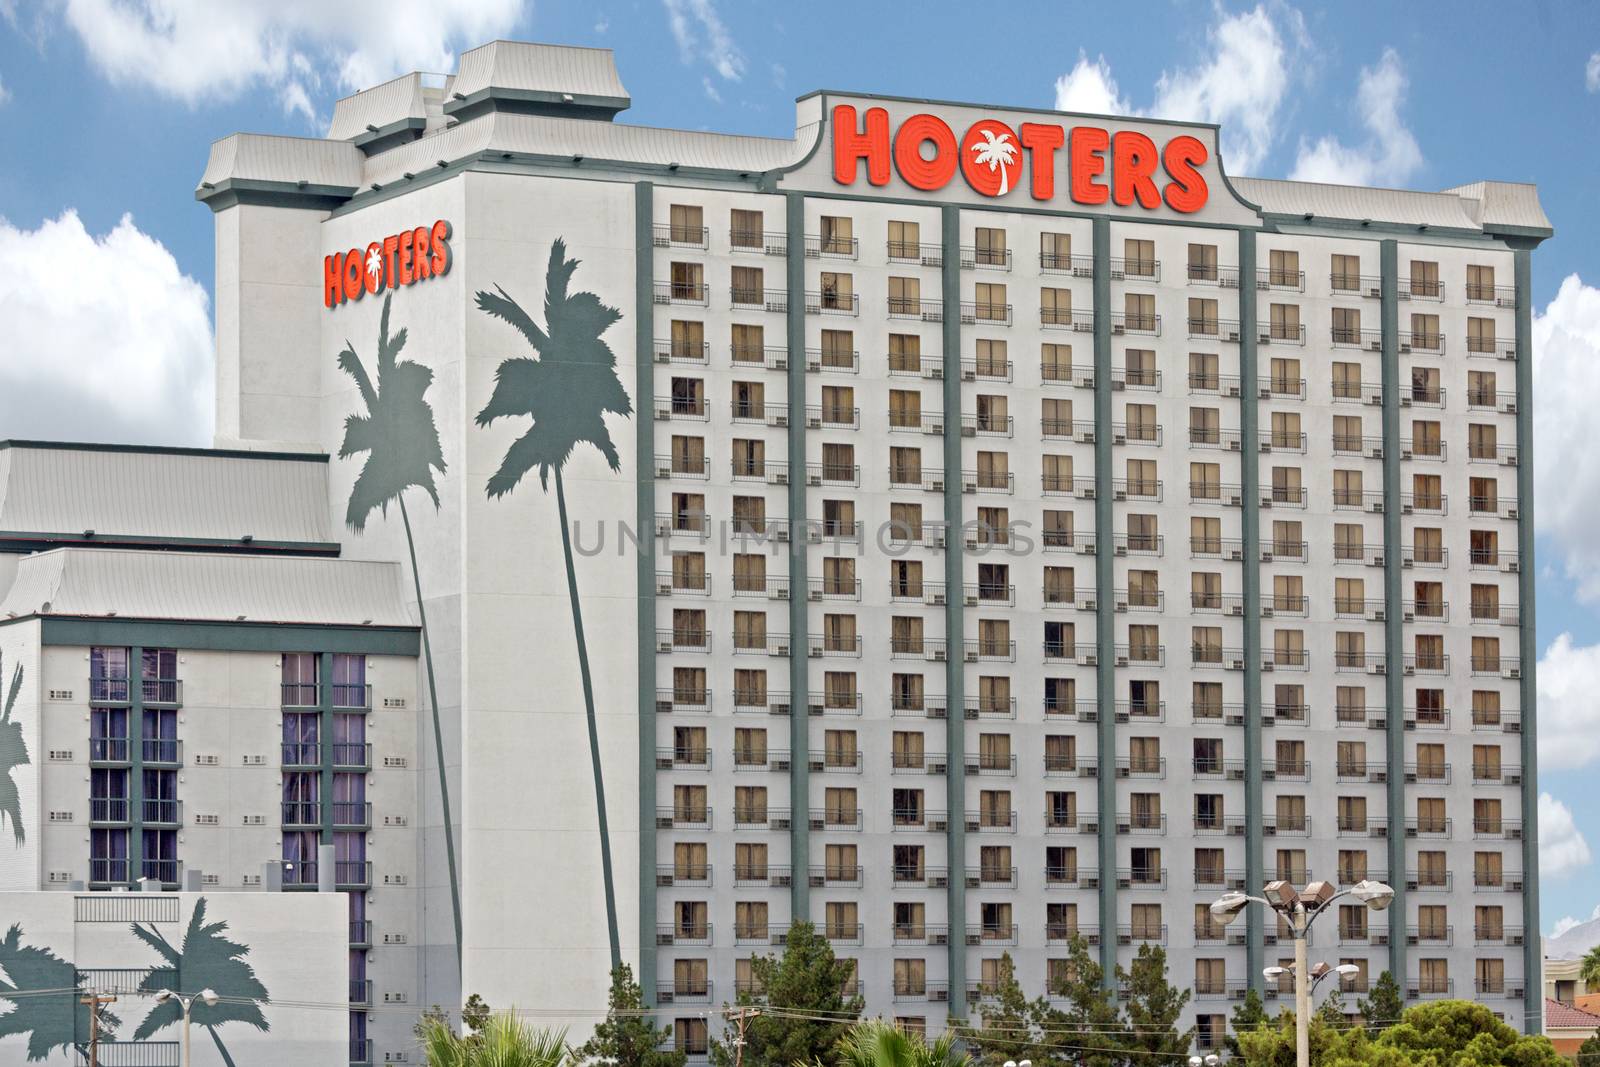 LAS VEGAS, NEVADA - May 30, 2009: Hooters Casino Hotel in Las Vegas